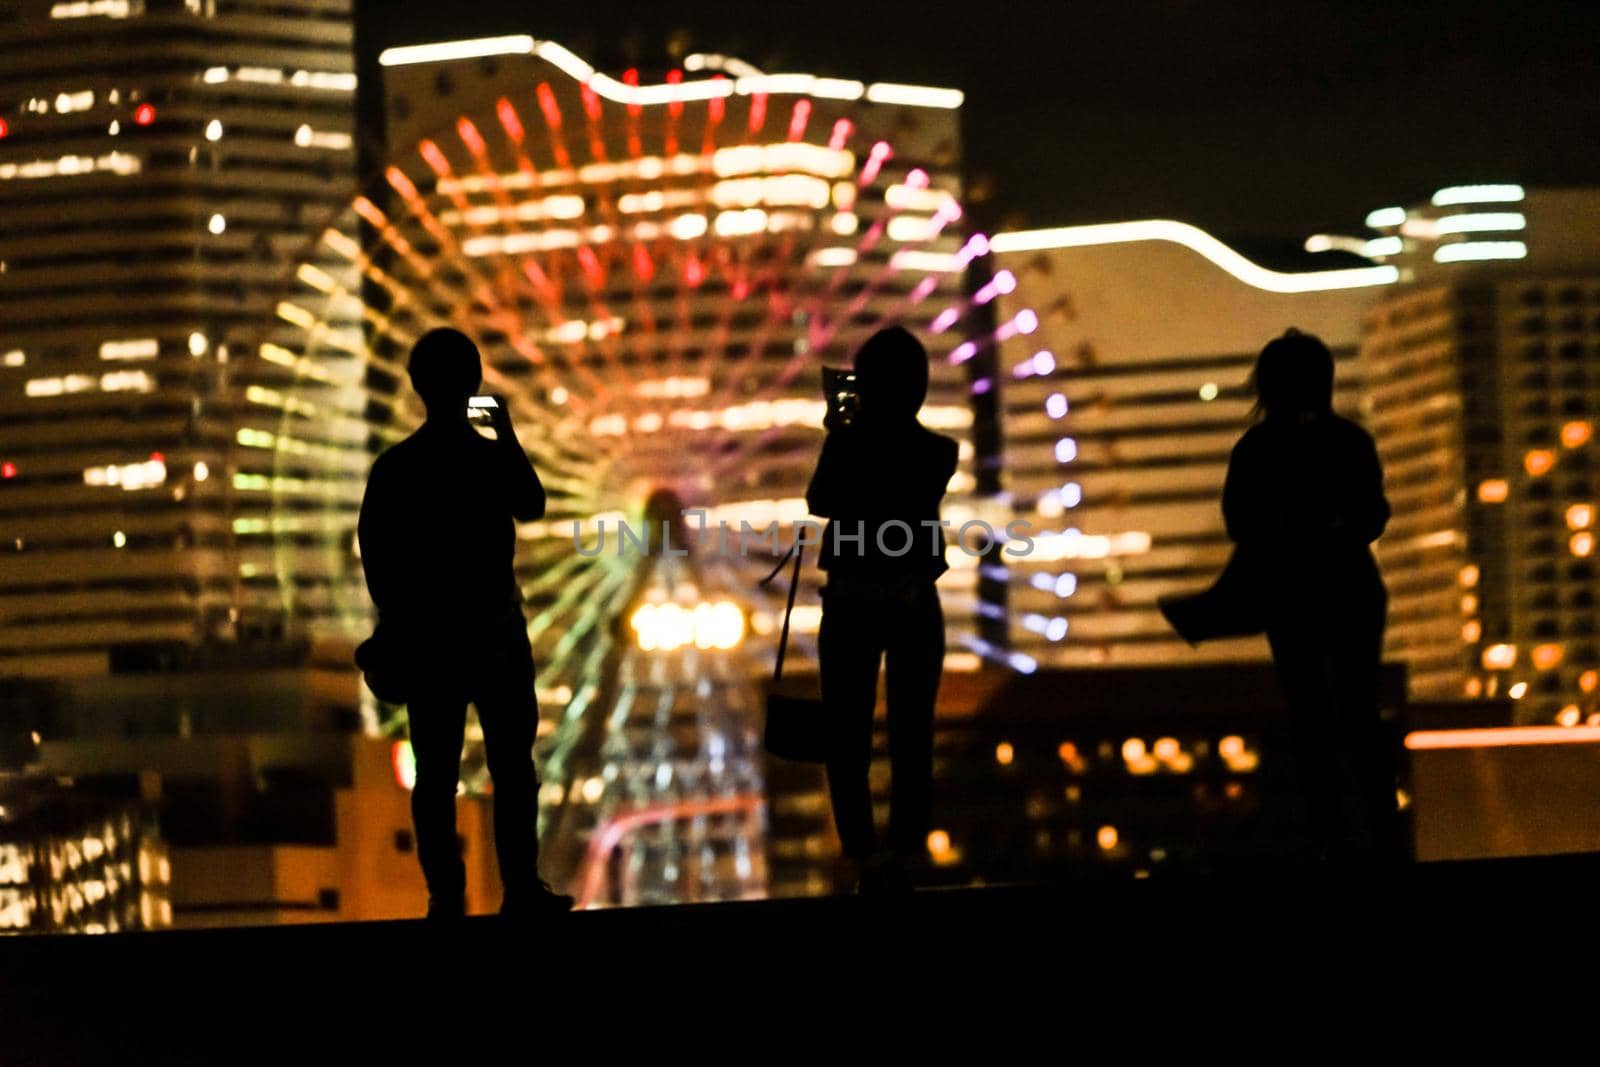 Minato Mirai Night View and People Silhouette by kanzilyou